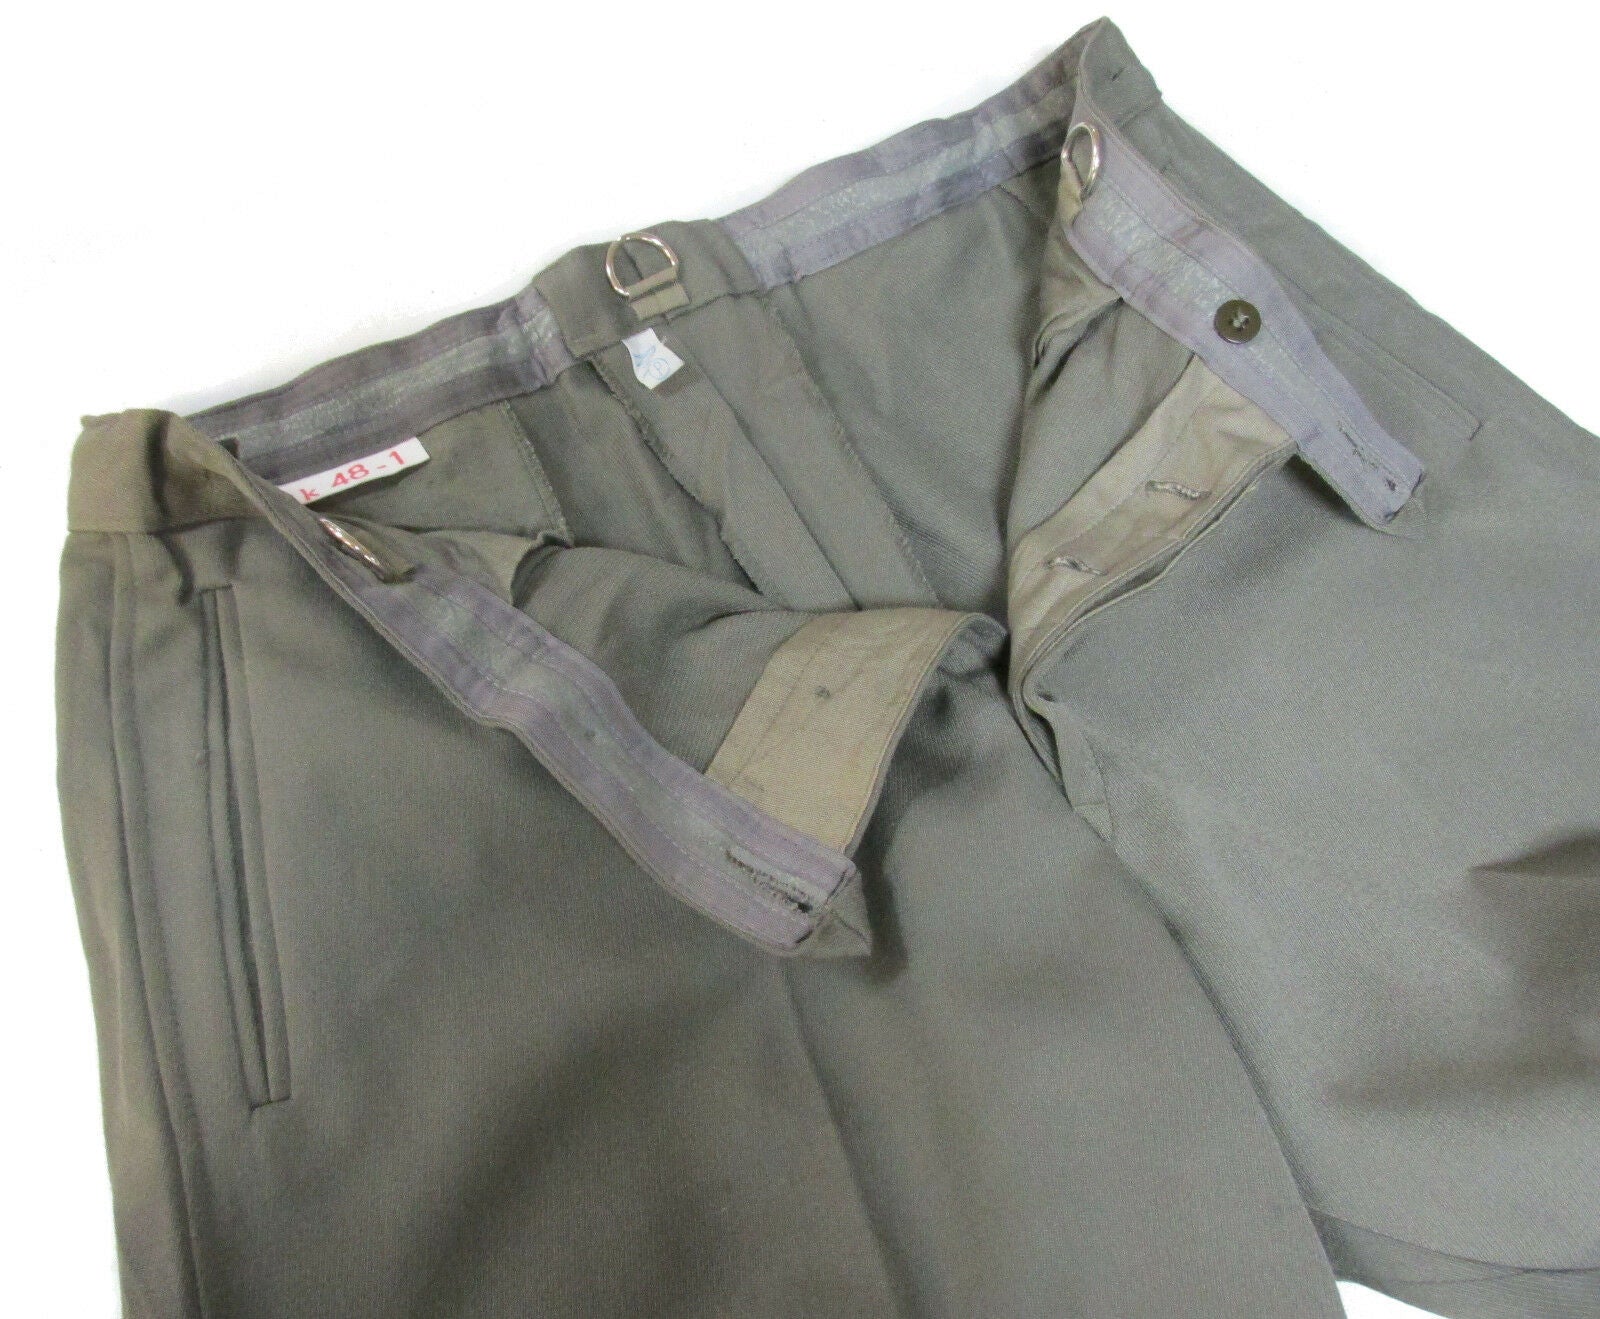 East German Military Breeches - Grey - Authentic European Surplus Military Pants